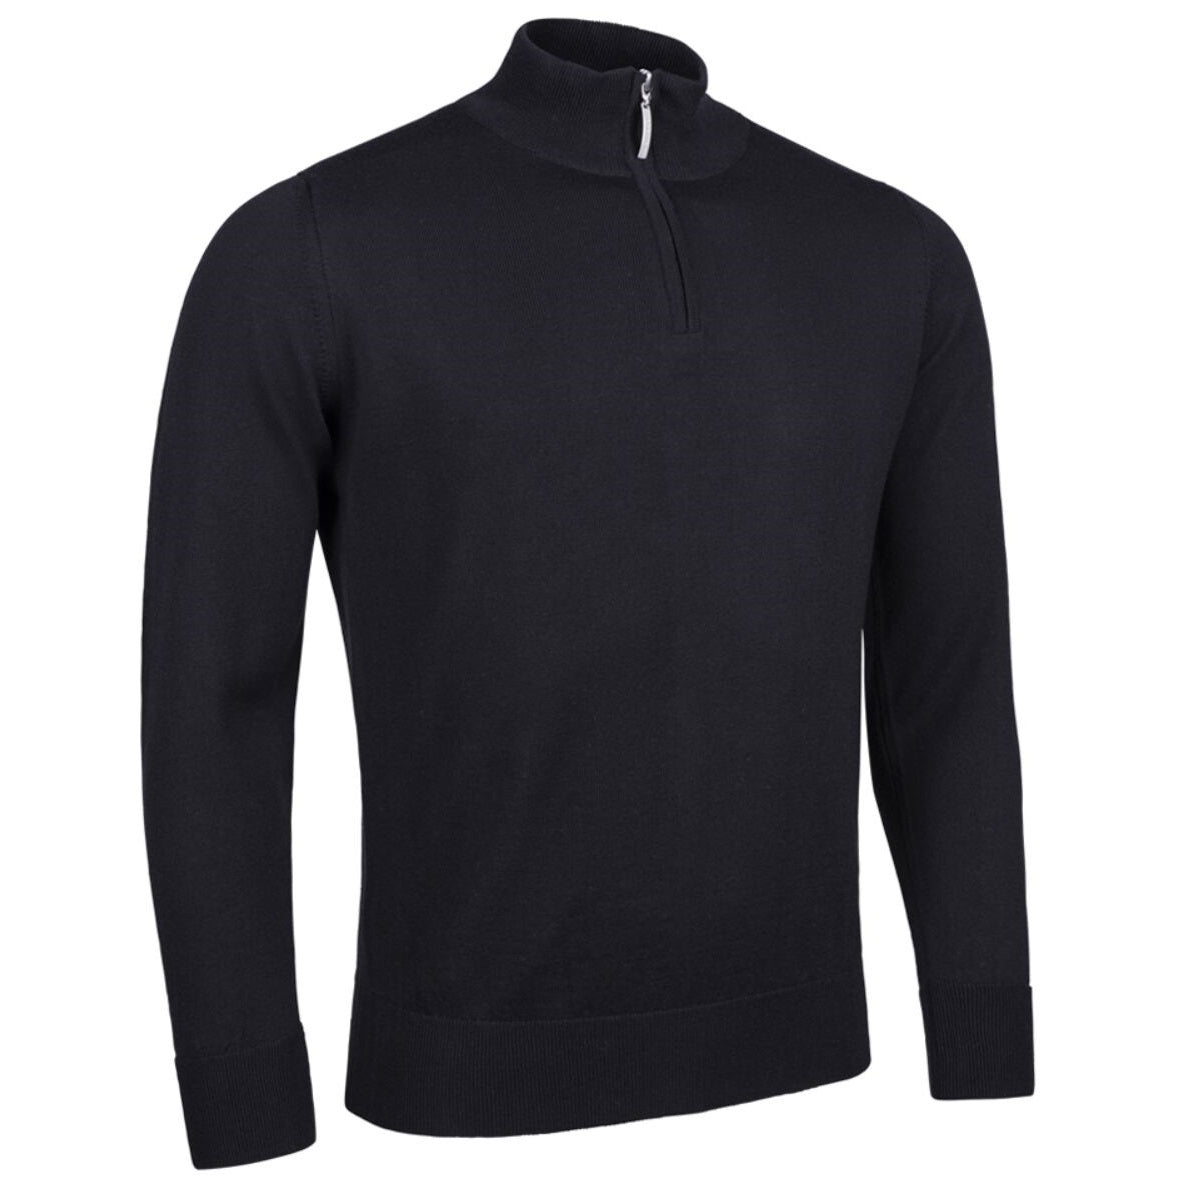 GLENMUIR Jasper Quarter Zip Merino Wool Sweater - Mens - Black